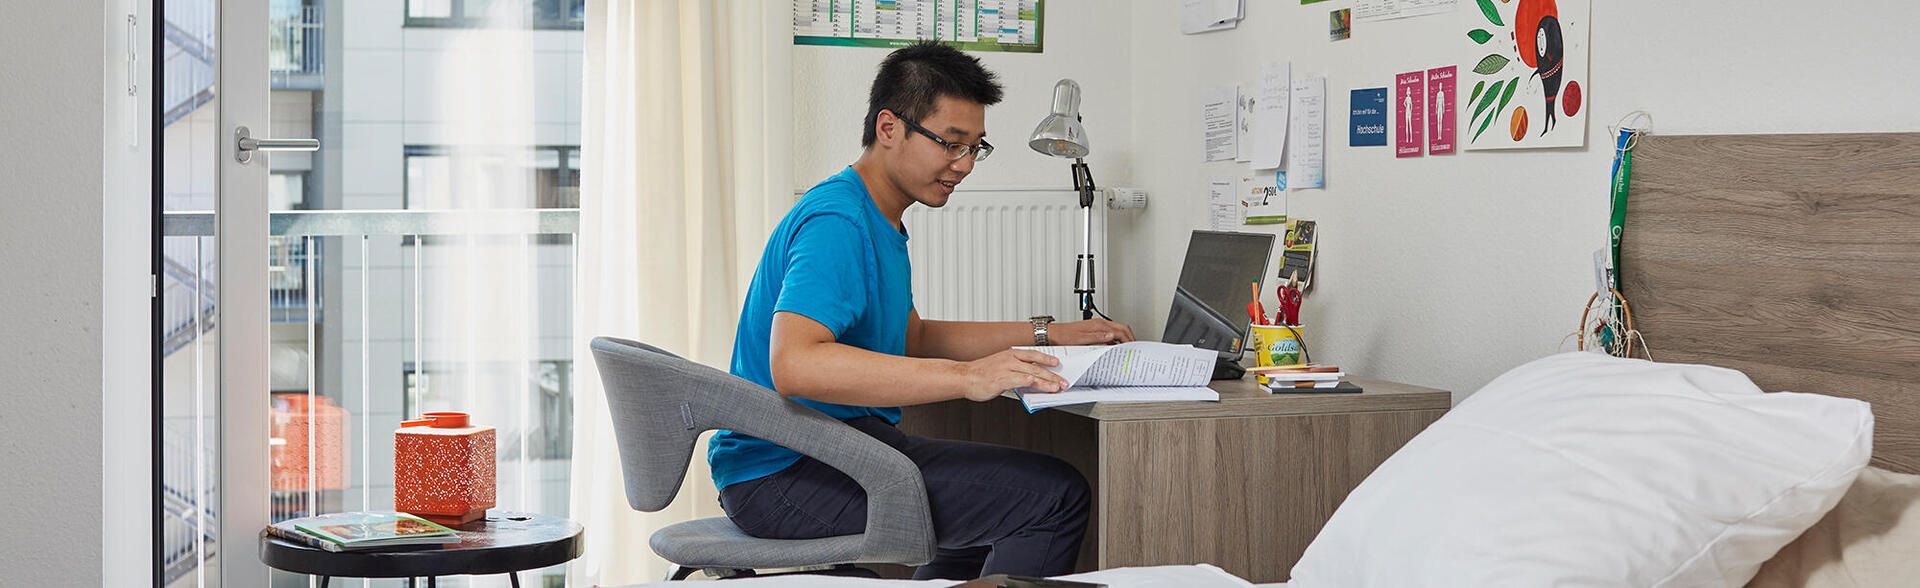 A student studies at a desk in a 1-room flat of the Boardinghaus Esslingen